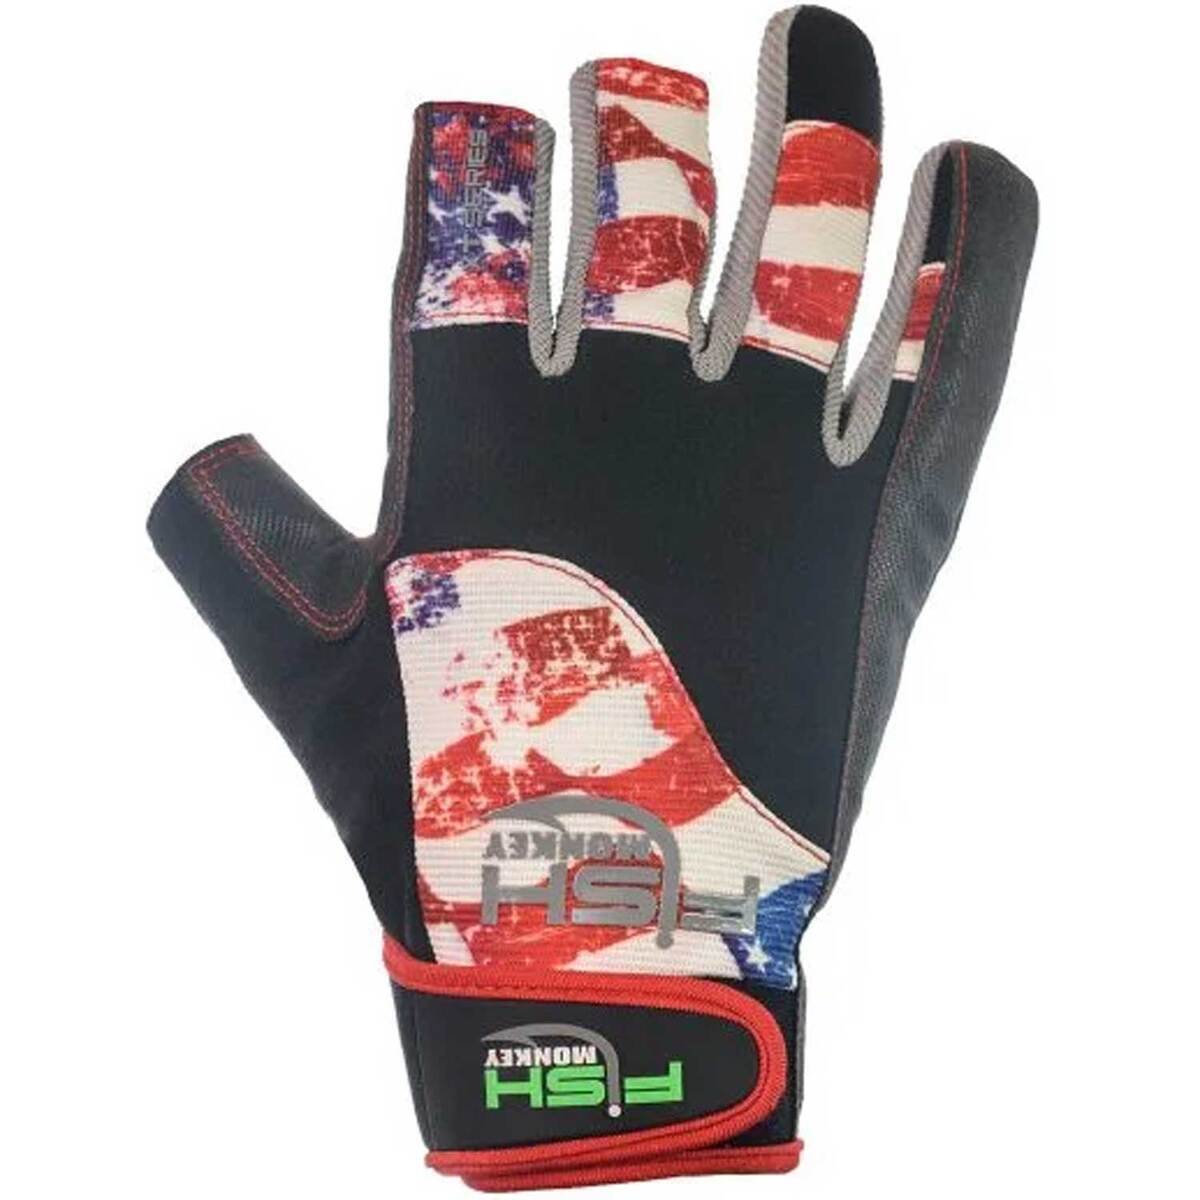 https://www.sportsmans.com/medias/fish-monkey-mens-quick-release-wiring-gloves-americana-m-1786021-1.jpg?context=bWFzdGVyfGltYWdlc3w4NzM5OHxpbWFnZS9qcGVnfGFERTJMMmcwTUM4eE1Ea3hOems1TkRFMk9ETTFNQzh4TnpnMk1ESXhMVEZmWW1GelpTMWpiMjUyWlhKemFXOXVSbTl5YldGMFh6RXlNREF0WTI5dWRtVnljMmx2YmtadmNtMWhkQXw1ZGI1MmI3ZjY4NjNhMTYyN2RmZWY0MDhiNzE4YzIwMjUwNjcwMjliNDgxZmYzOWJjYTNjMjlhYzk1MjJjNjZm